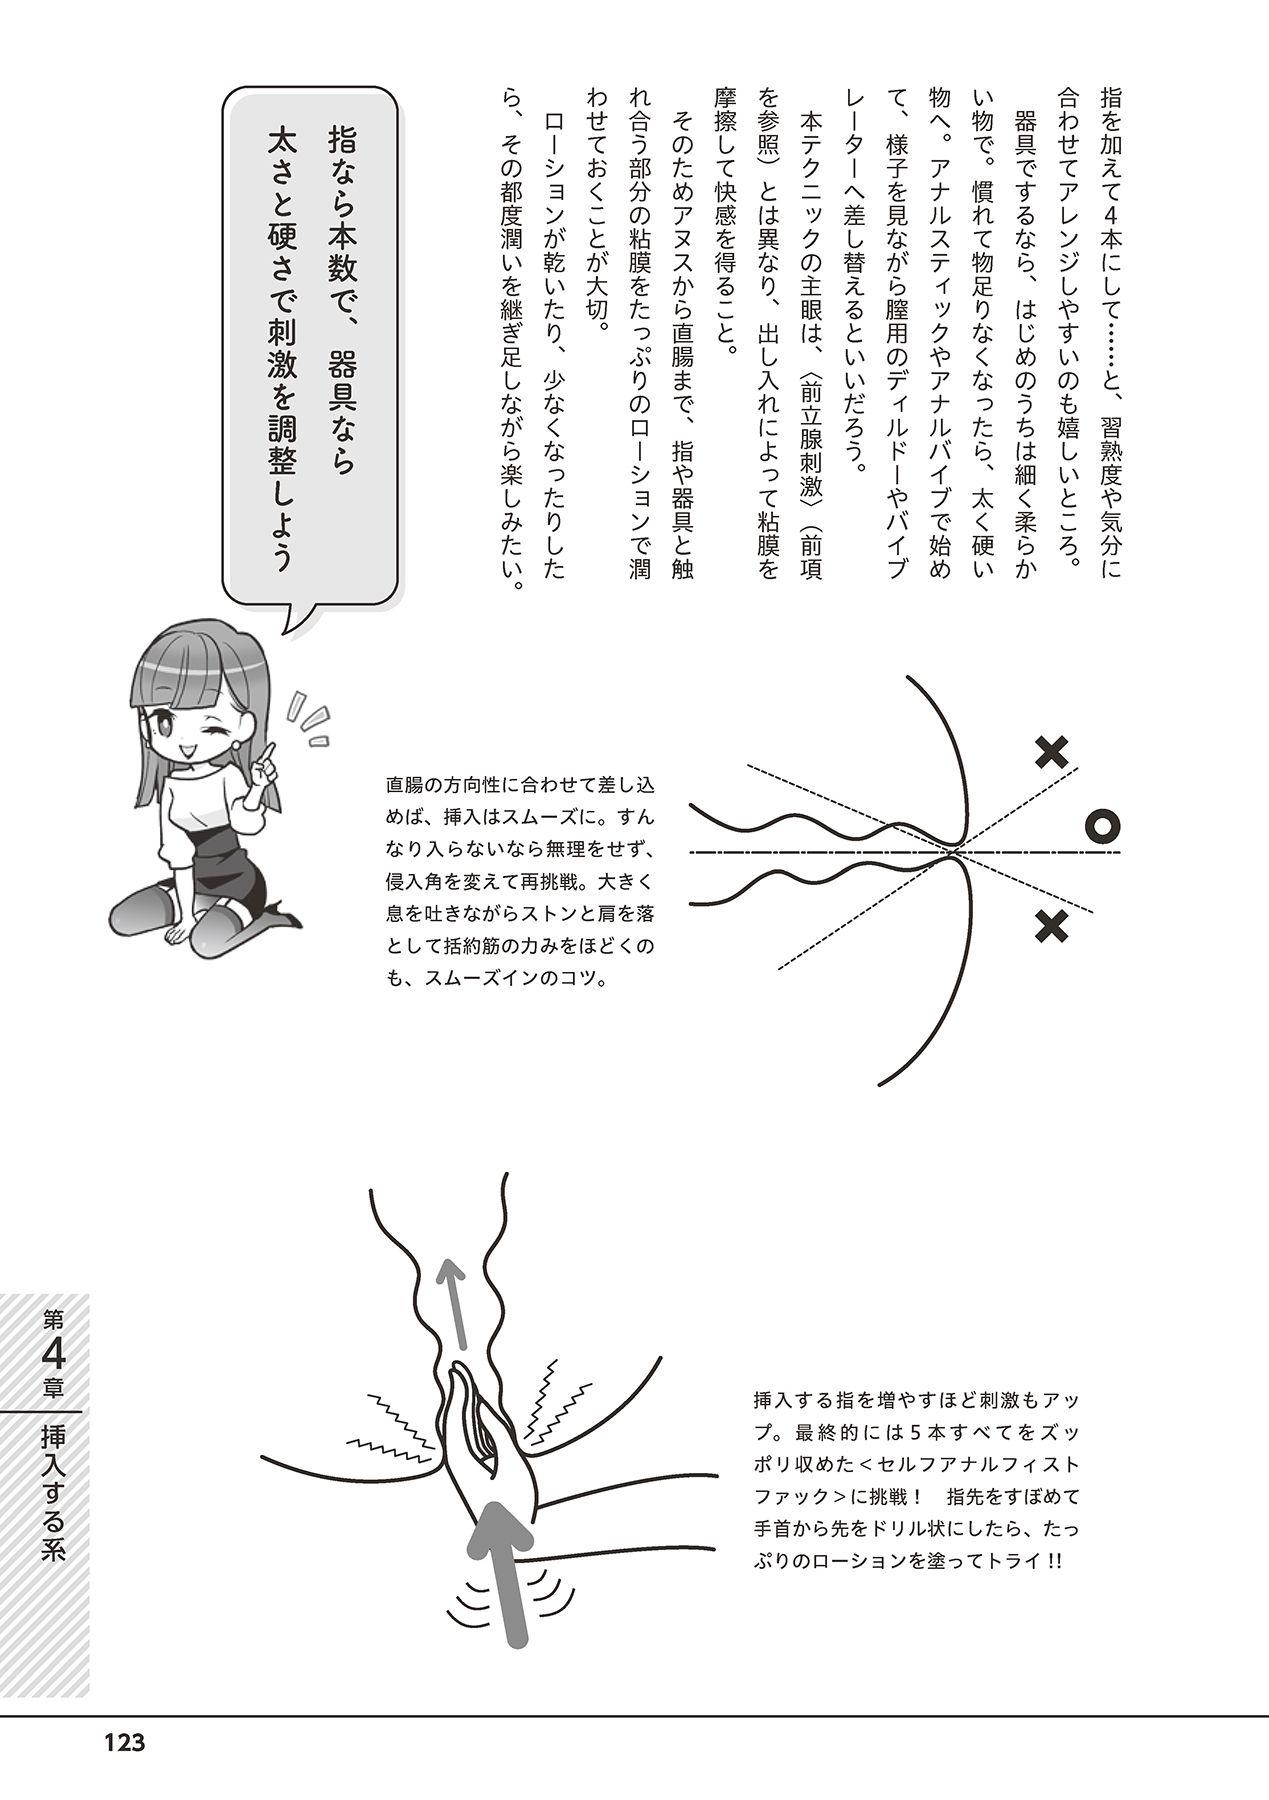 Otoko no Jii Onanie Kanzen Manual Illustration Han...... Onanie Play 124